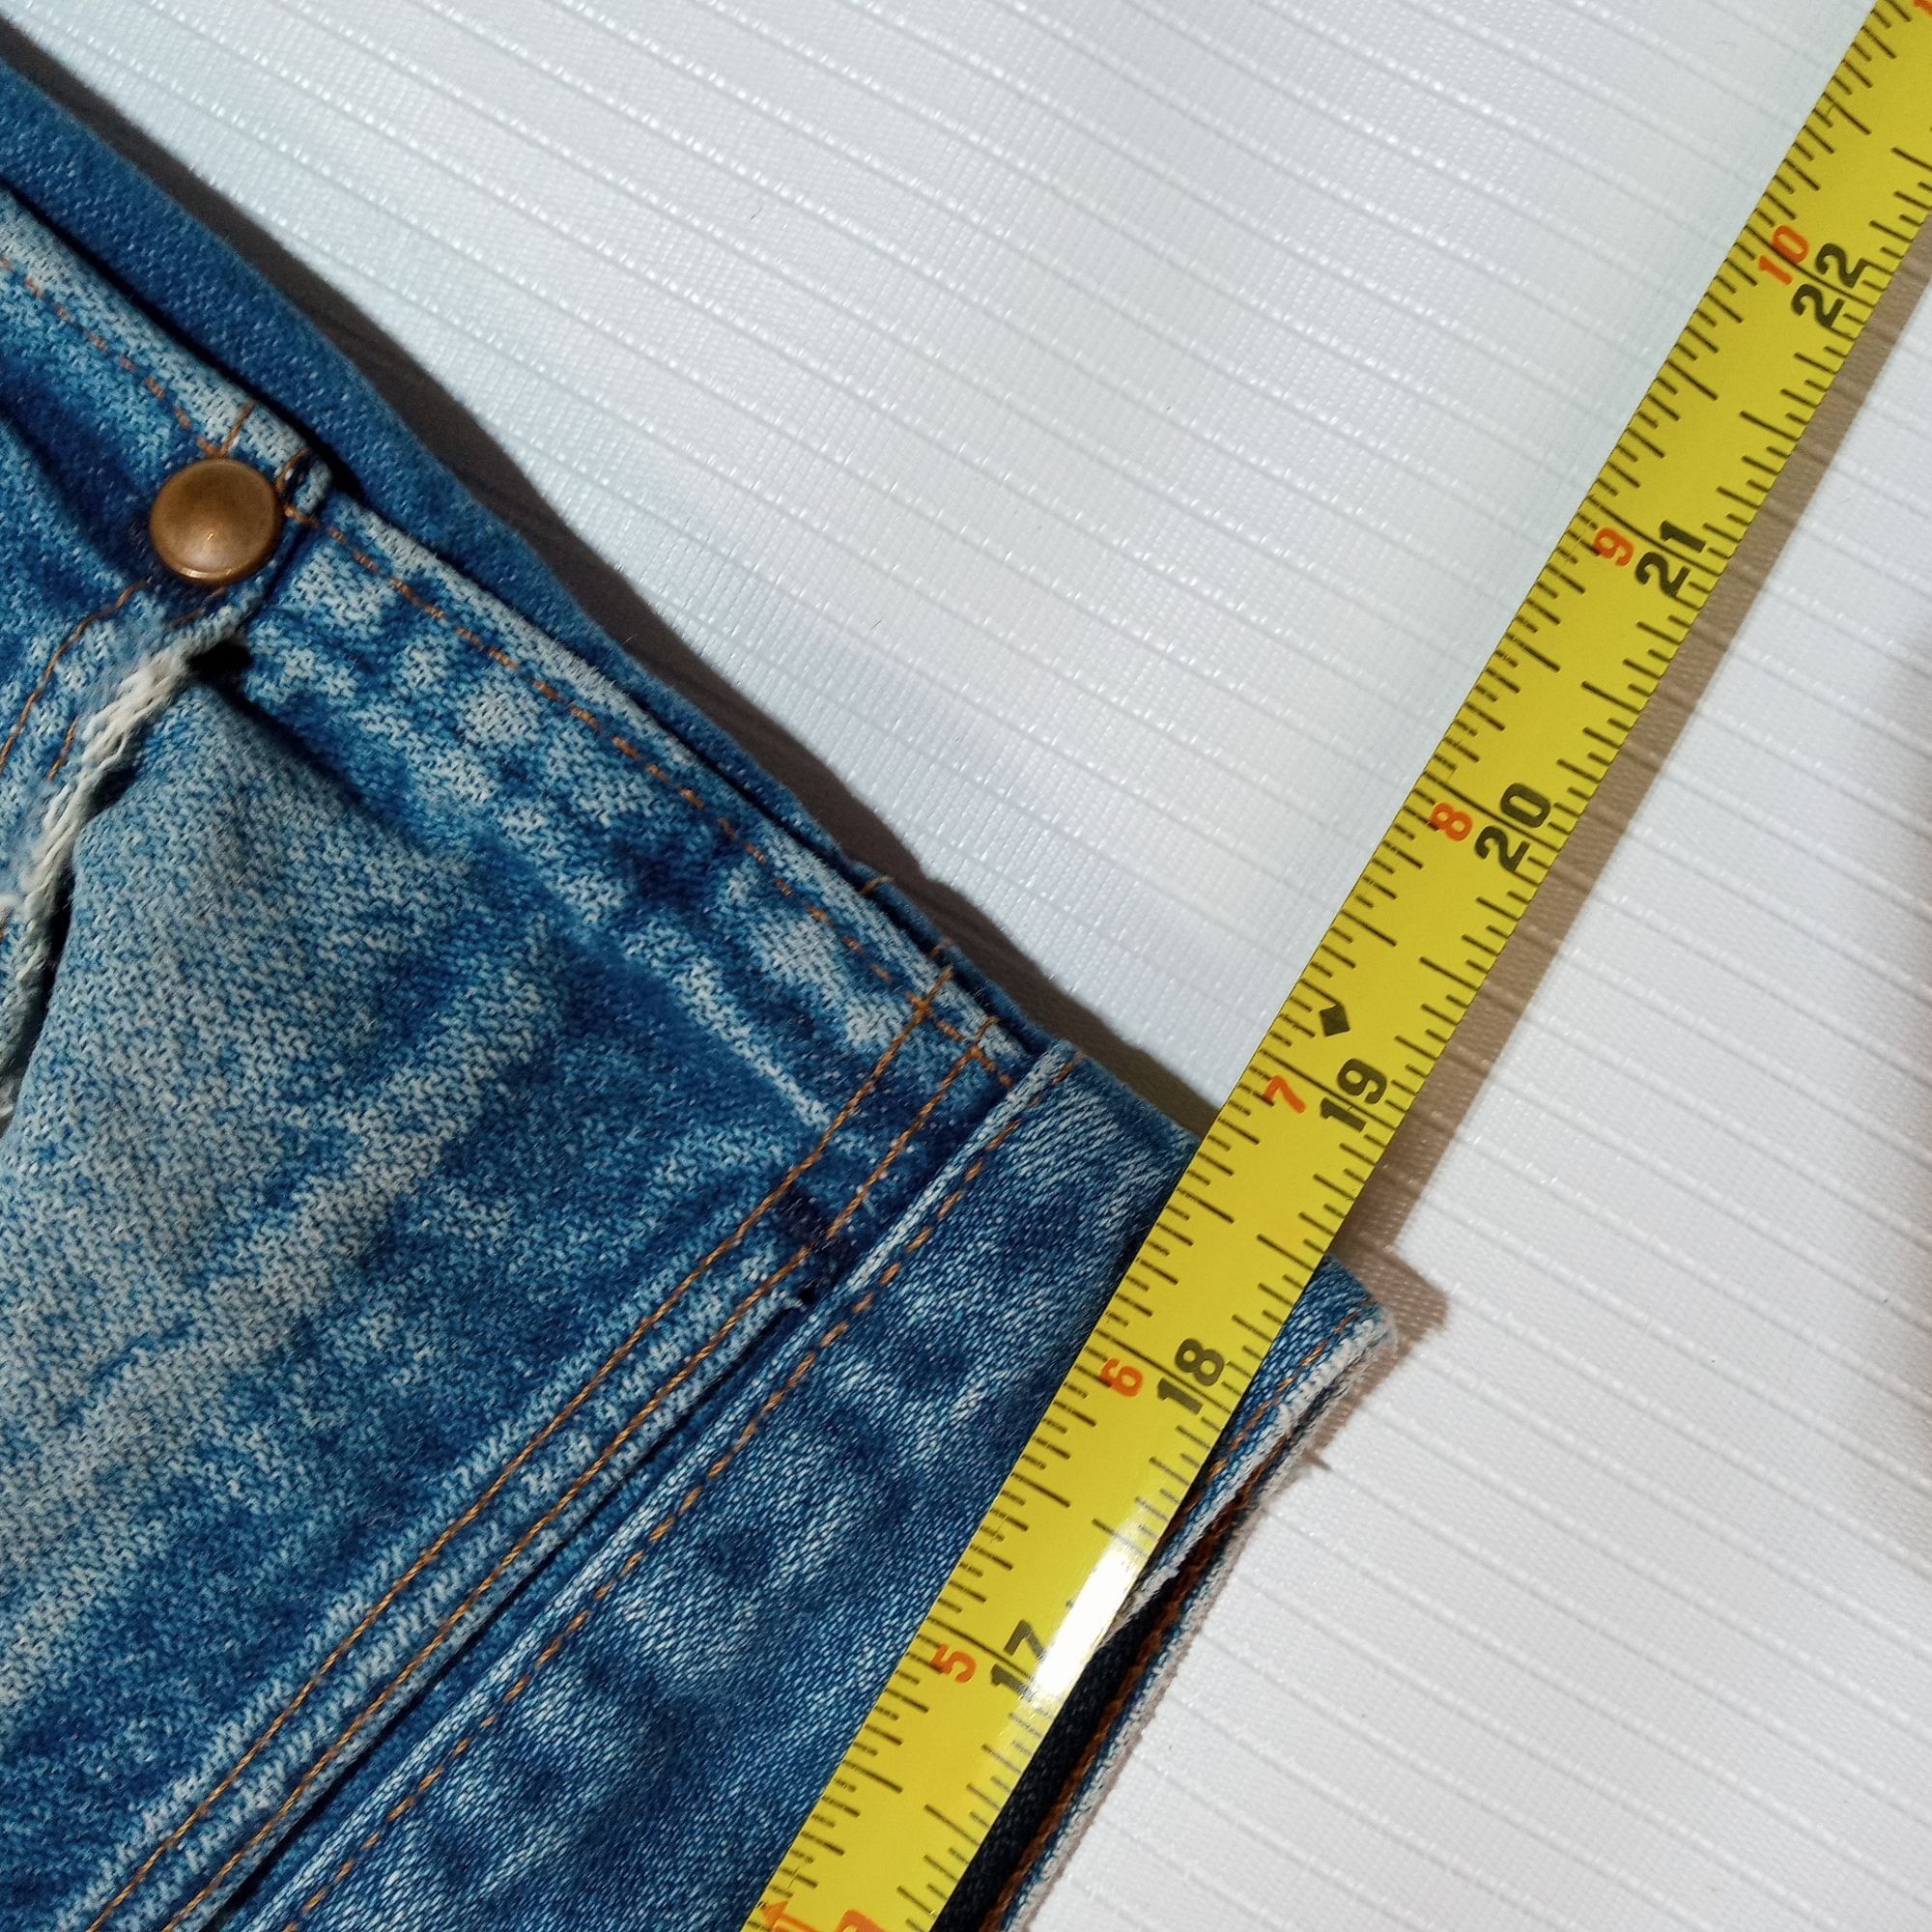 Wrangler Vintage Wrangler Mens Blue Jeans 37 x 28 Faded Worn Denim Co Size US 37 - 7 Thumbnail